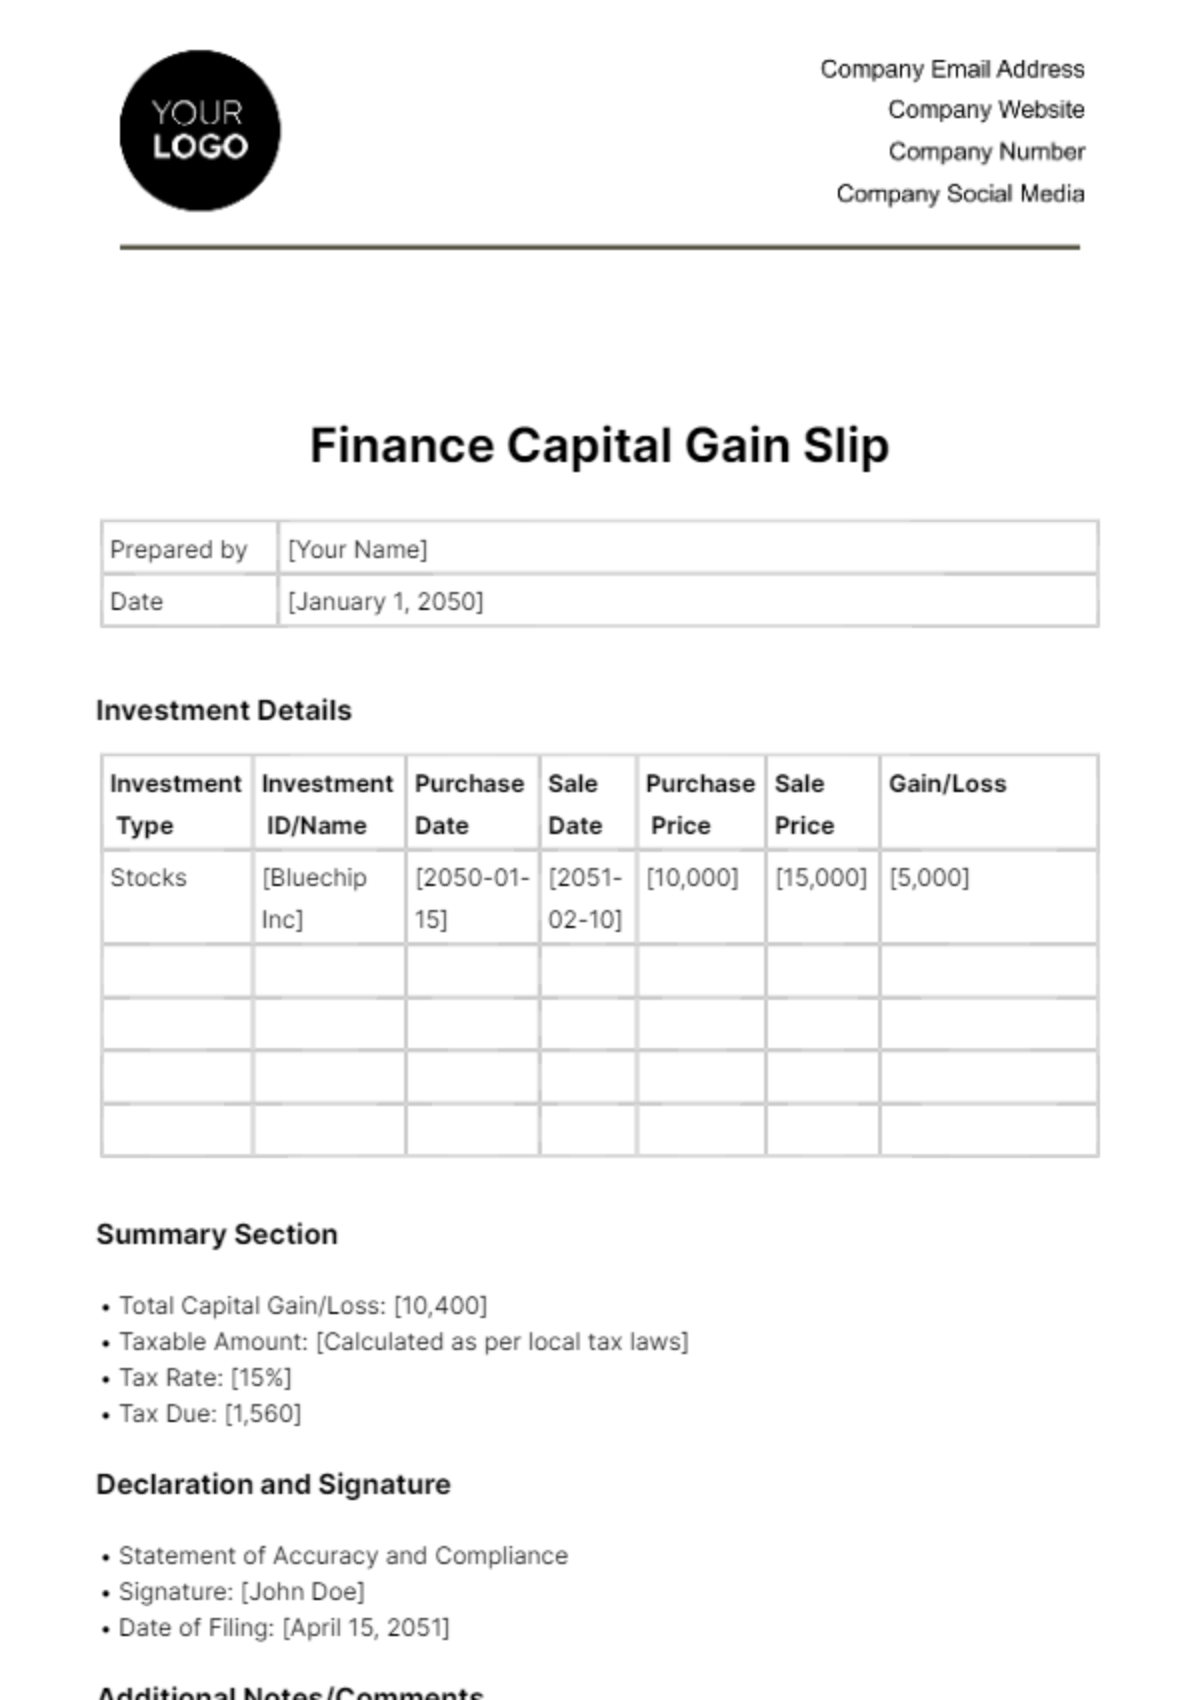 Finance Capital Gain Slip Template